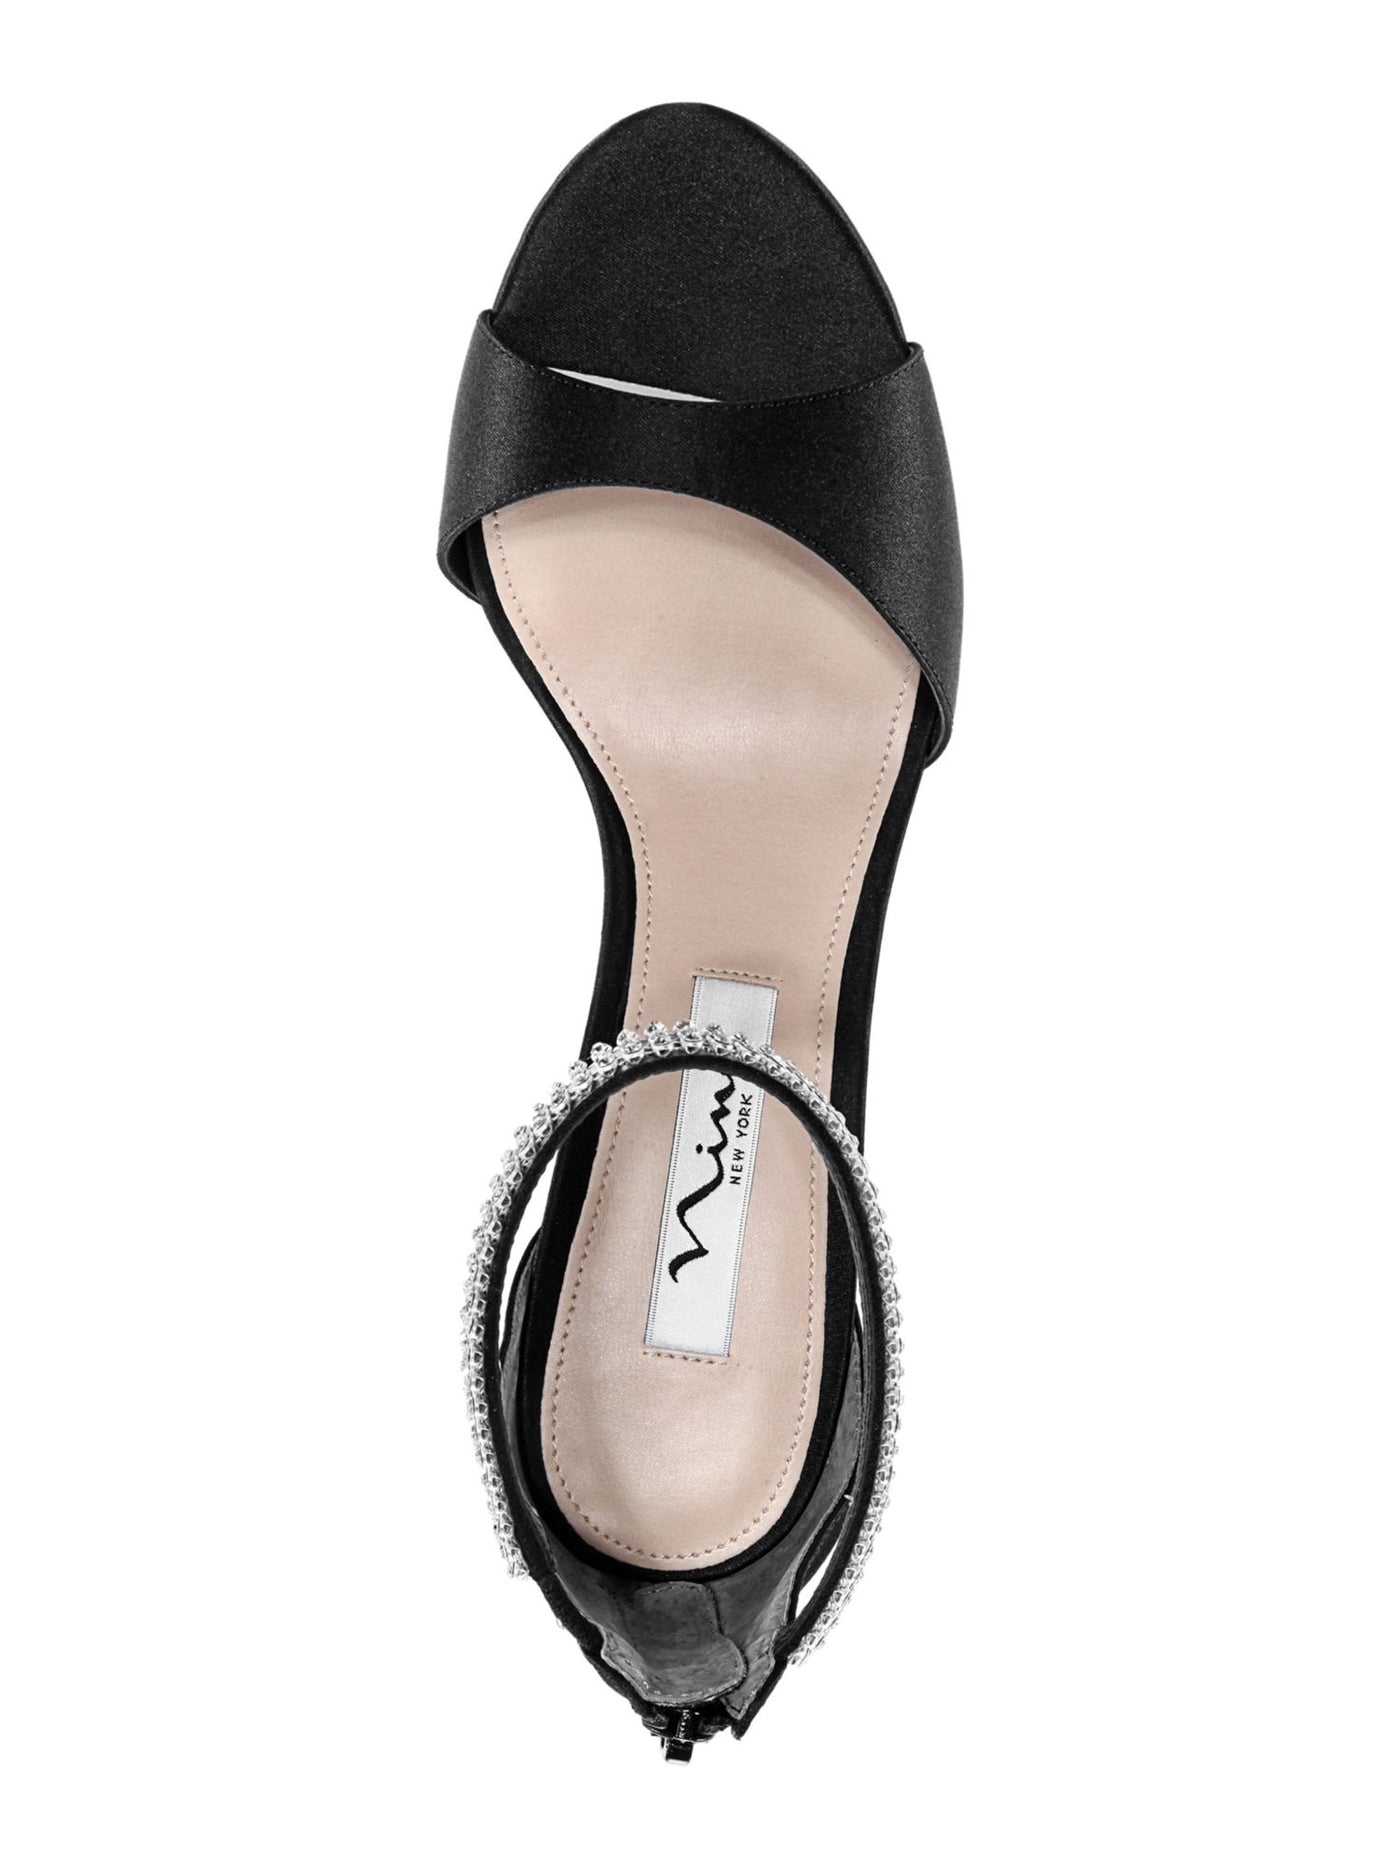 NINA Womens Black Cushioned Ankle Strap Embellished Volanda Almond Toe Stiletto Zip-Up Dress Sandals Shoes 10 M